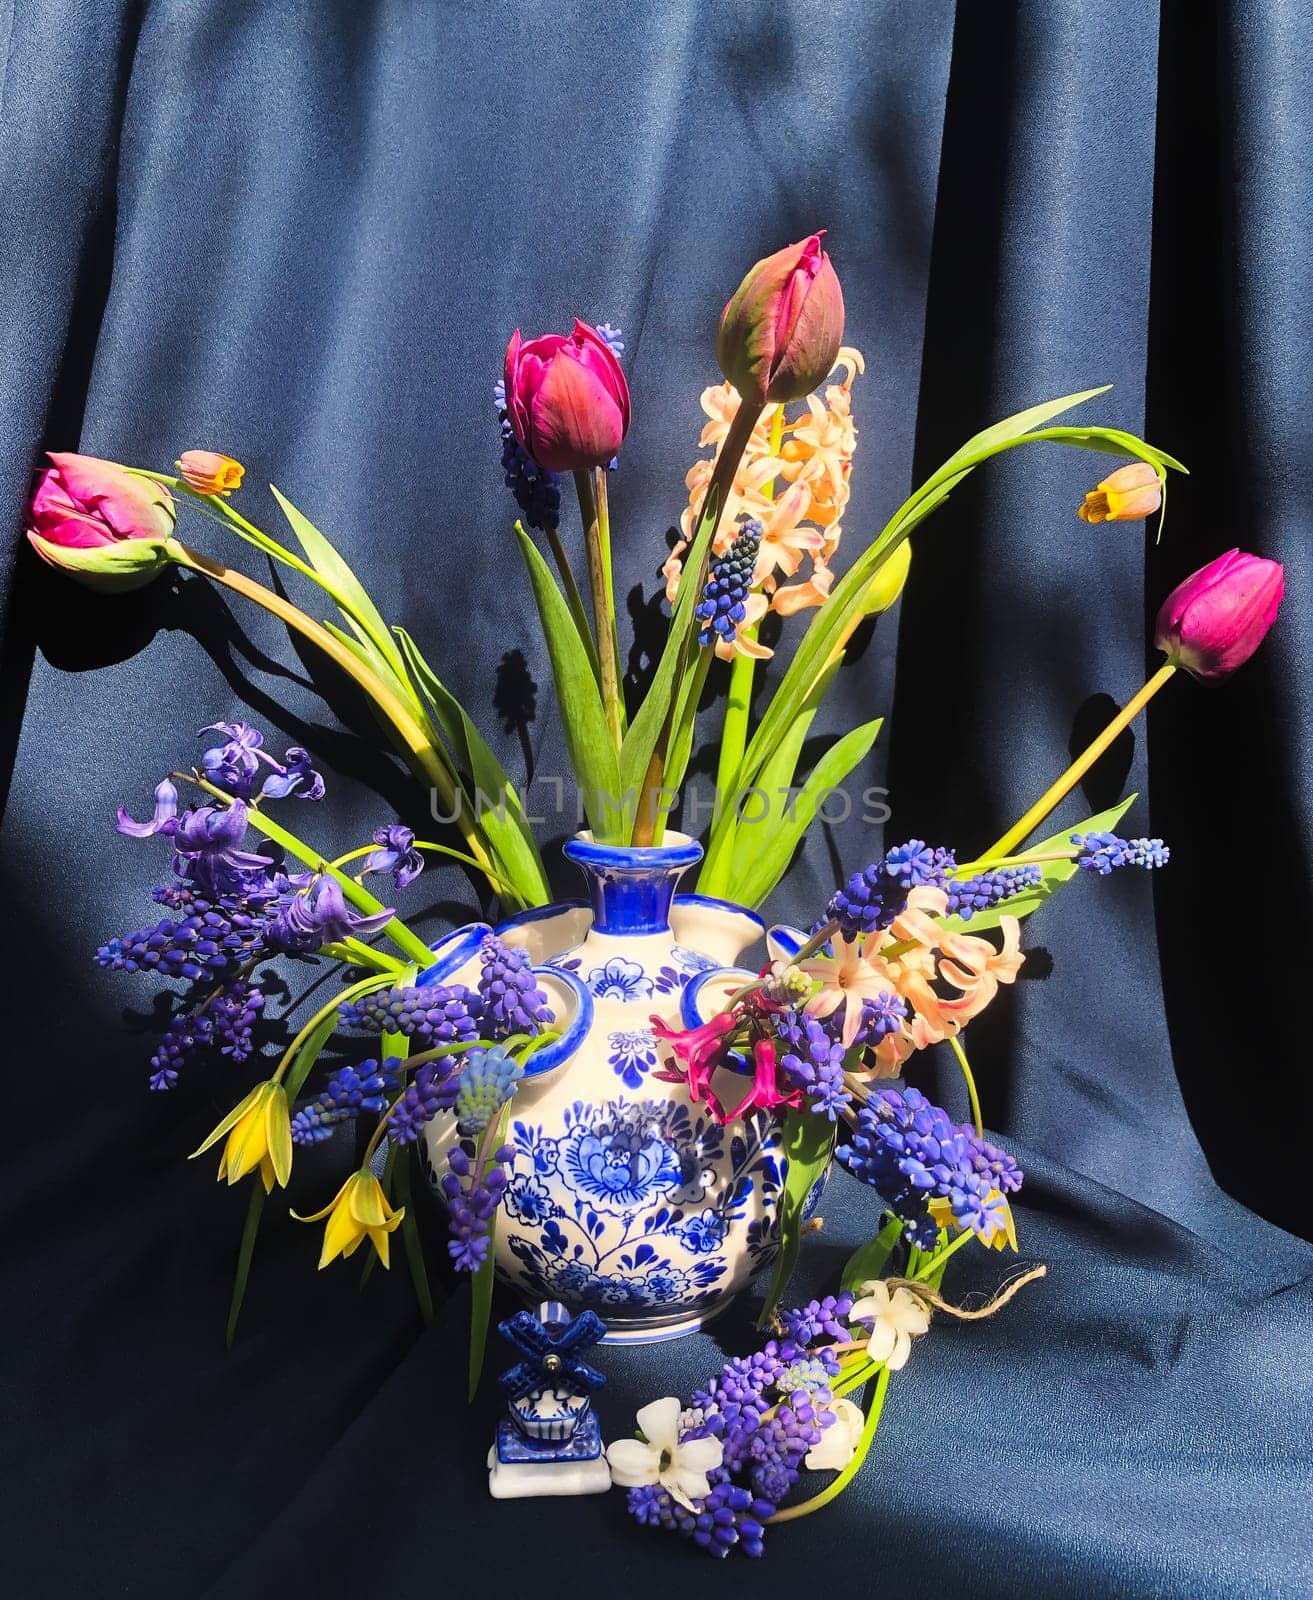 Romantic bouquet of the garden flowers by palinchak